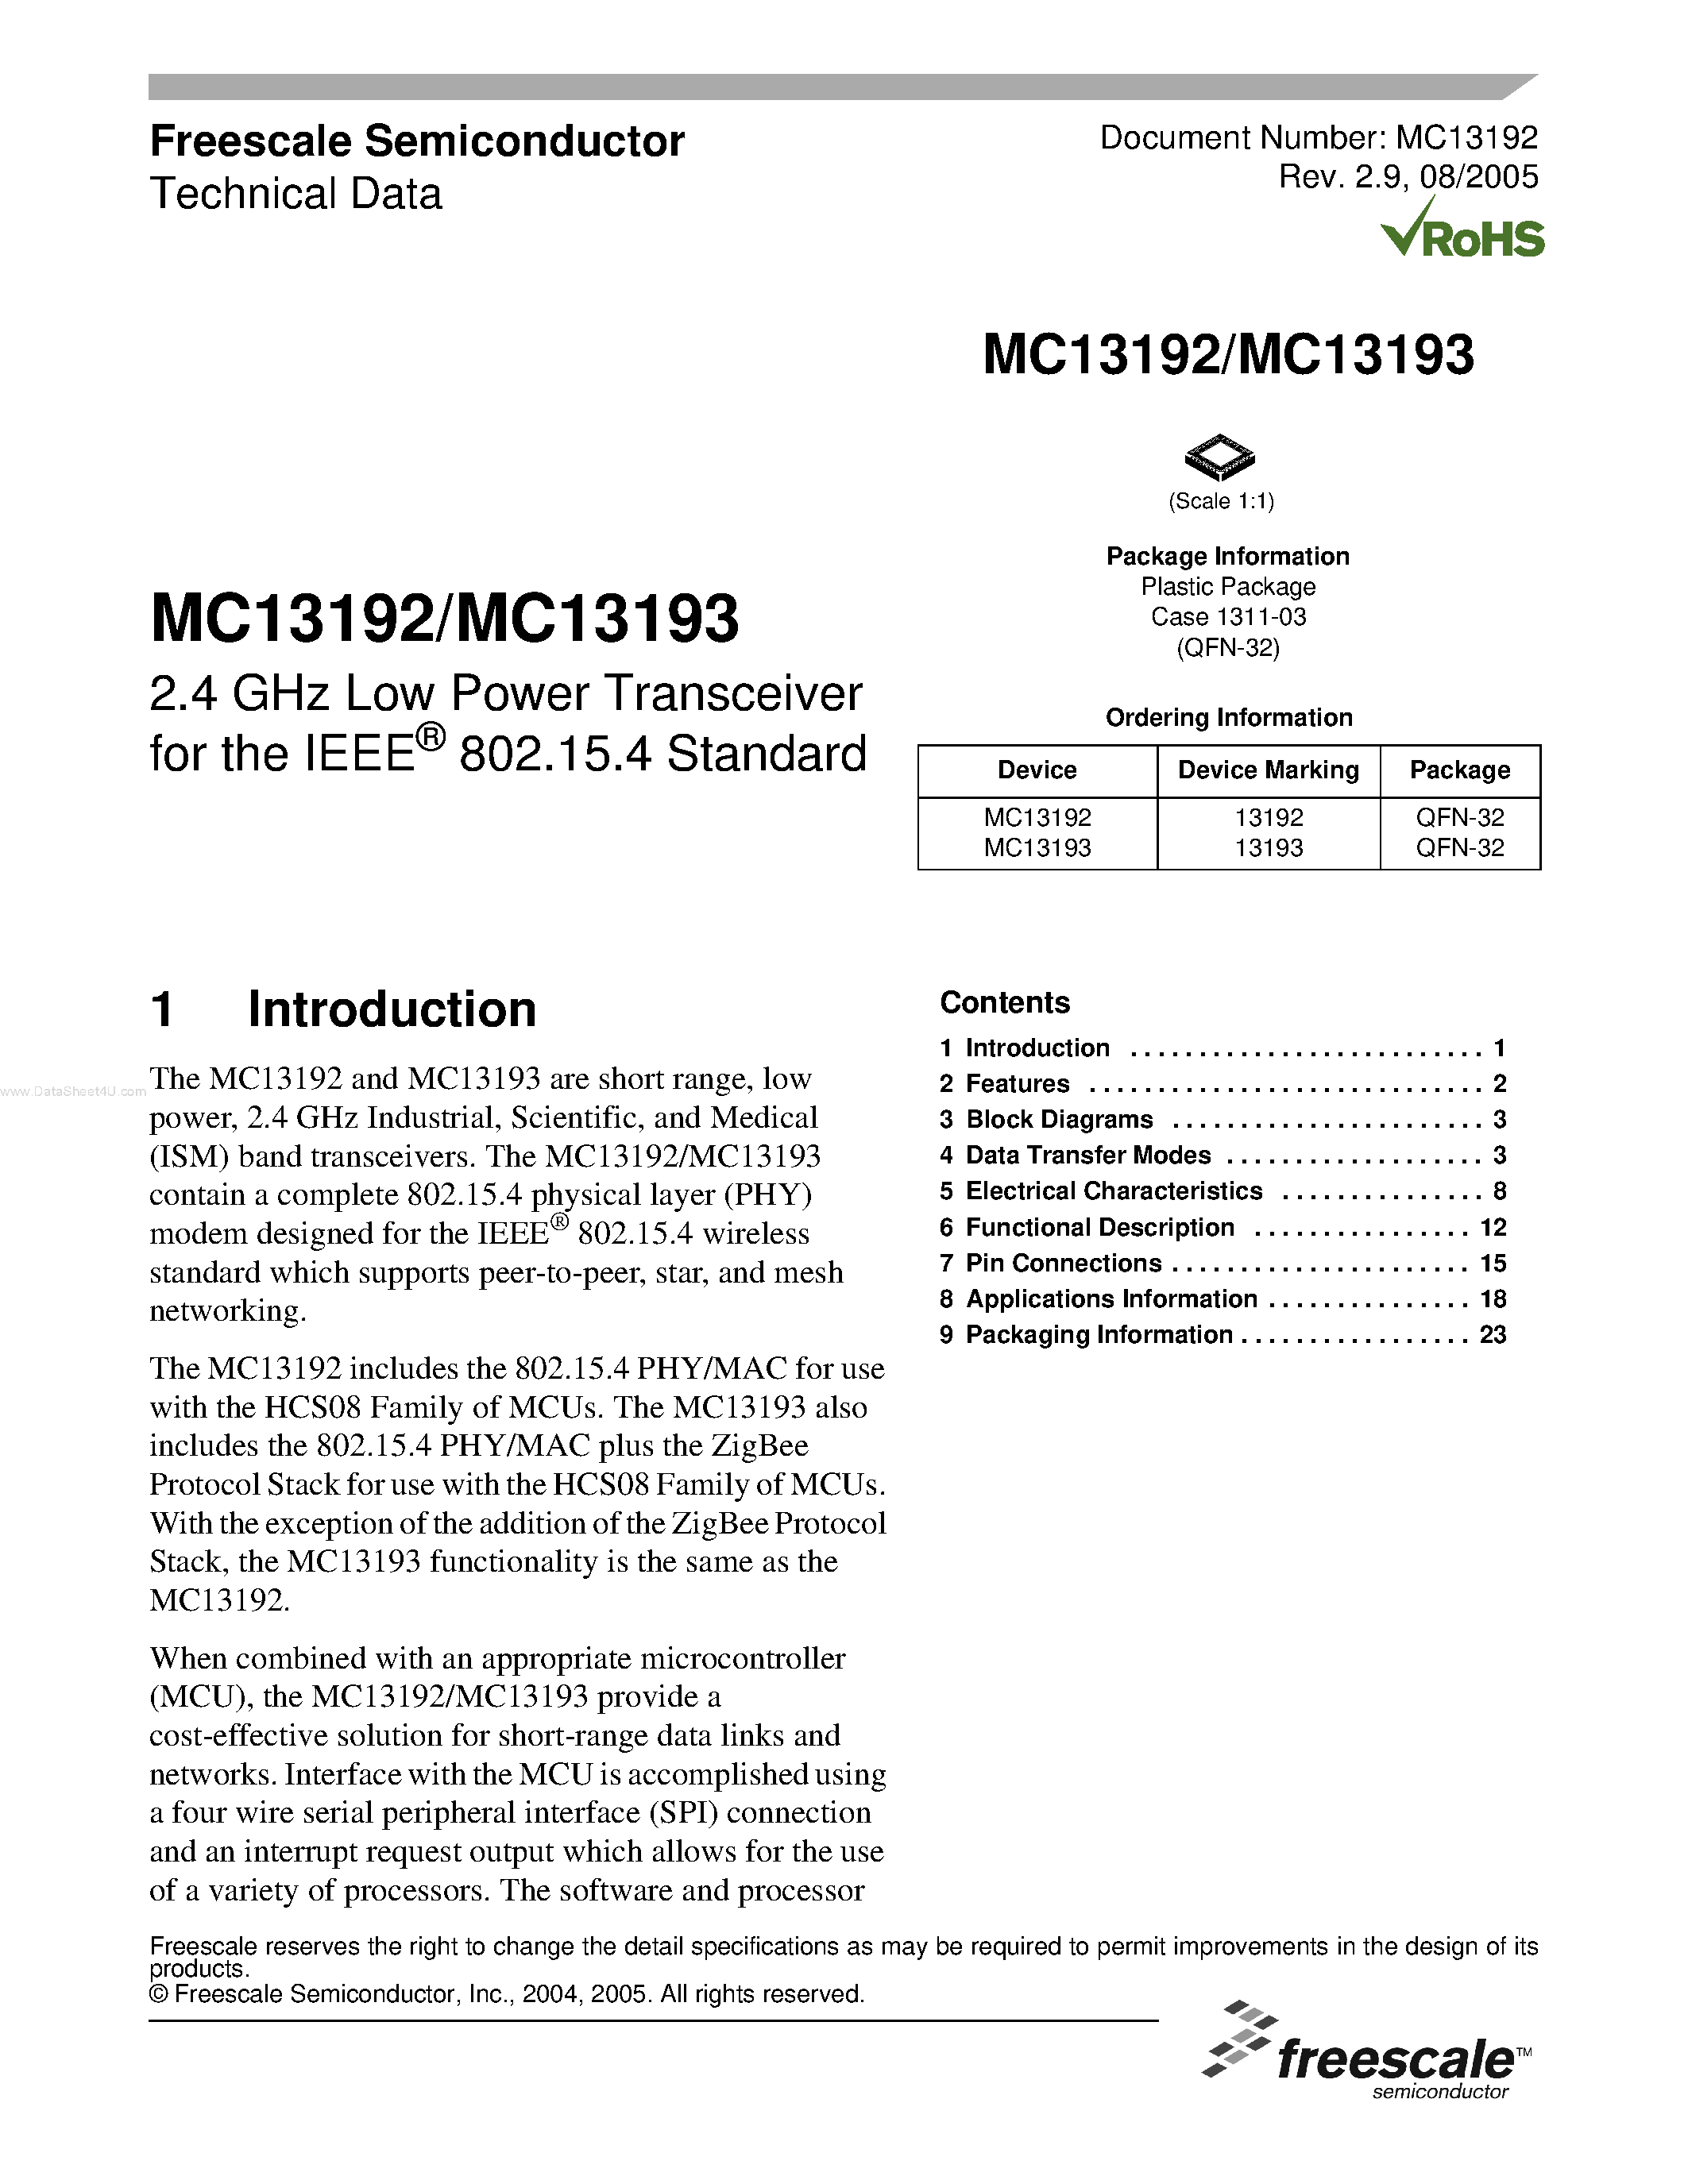 Даташит MC13192 - (MC13192 / MC13193) 2.4 GHz Low Power Transceiver страница 1